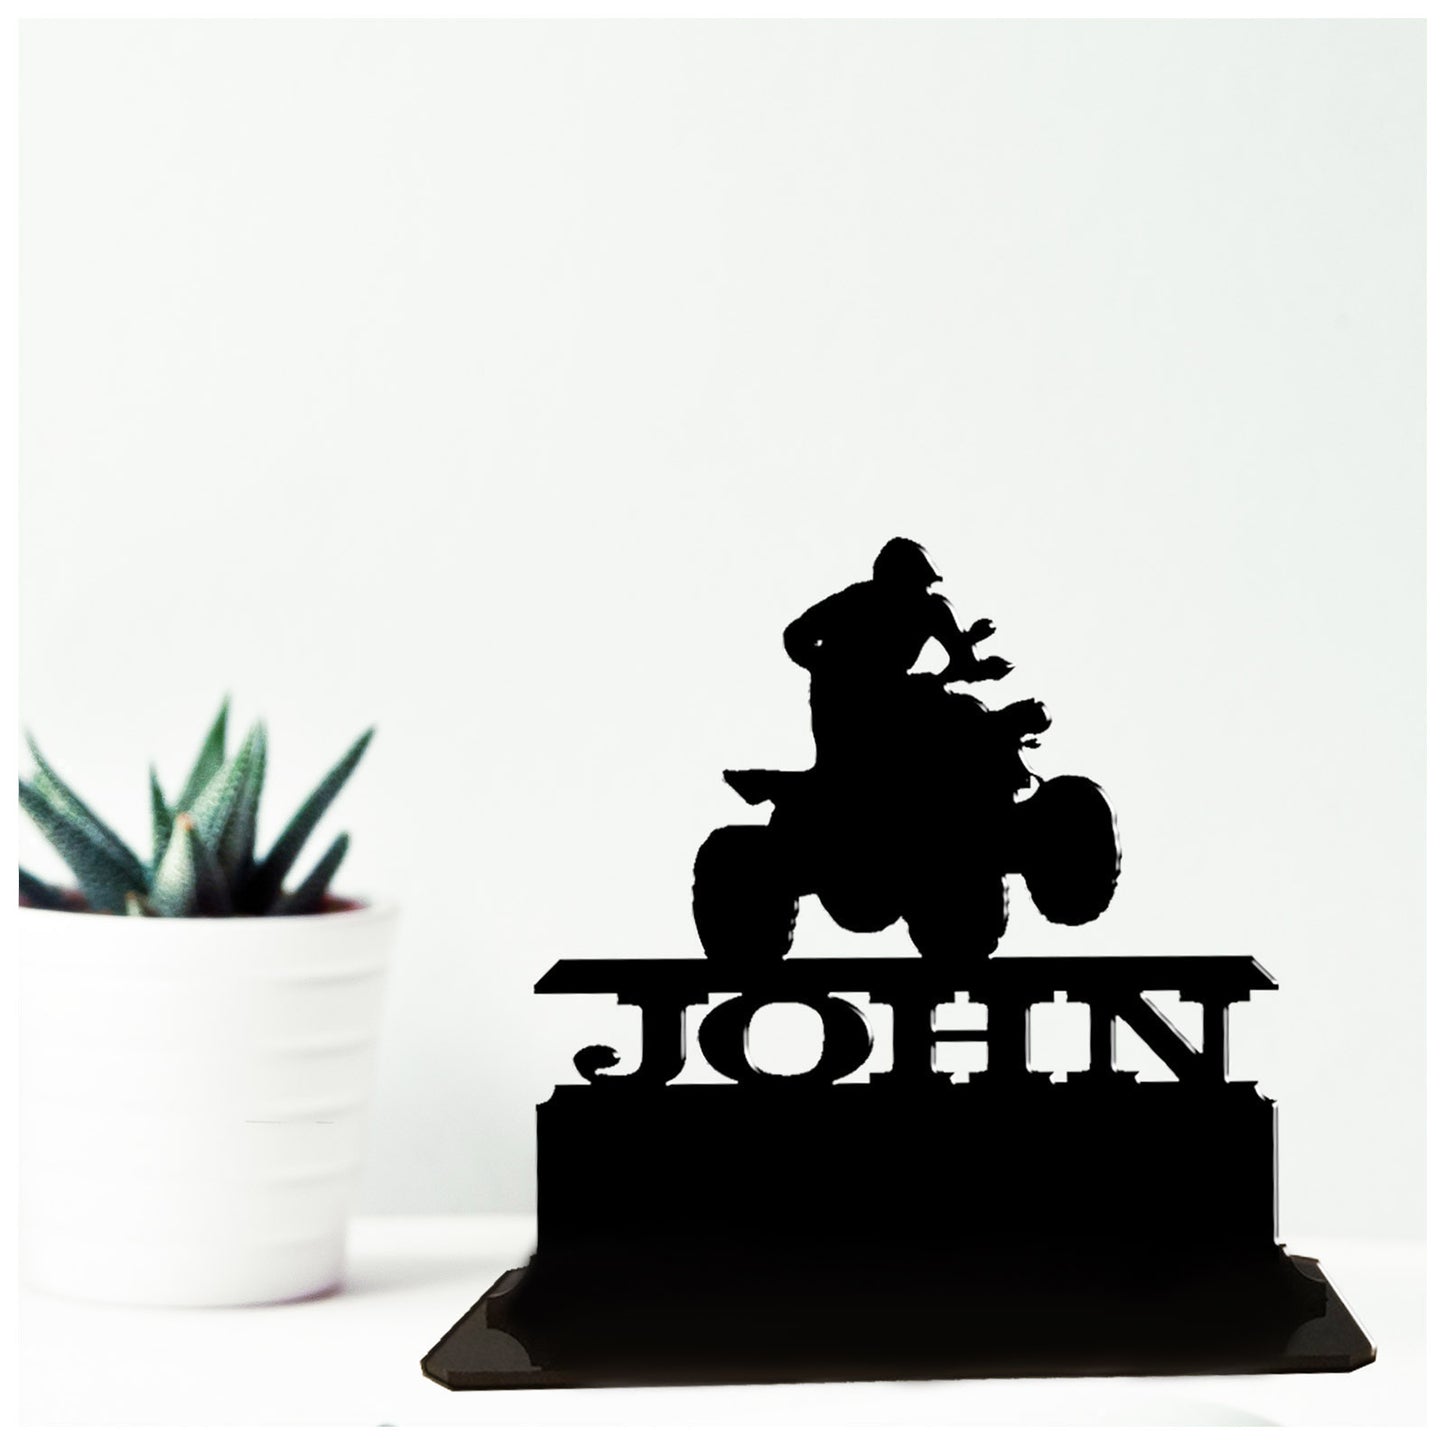 Acrylic unique personalised motocross atv quad bike gift ideas. Standalone ornament keepsake present.